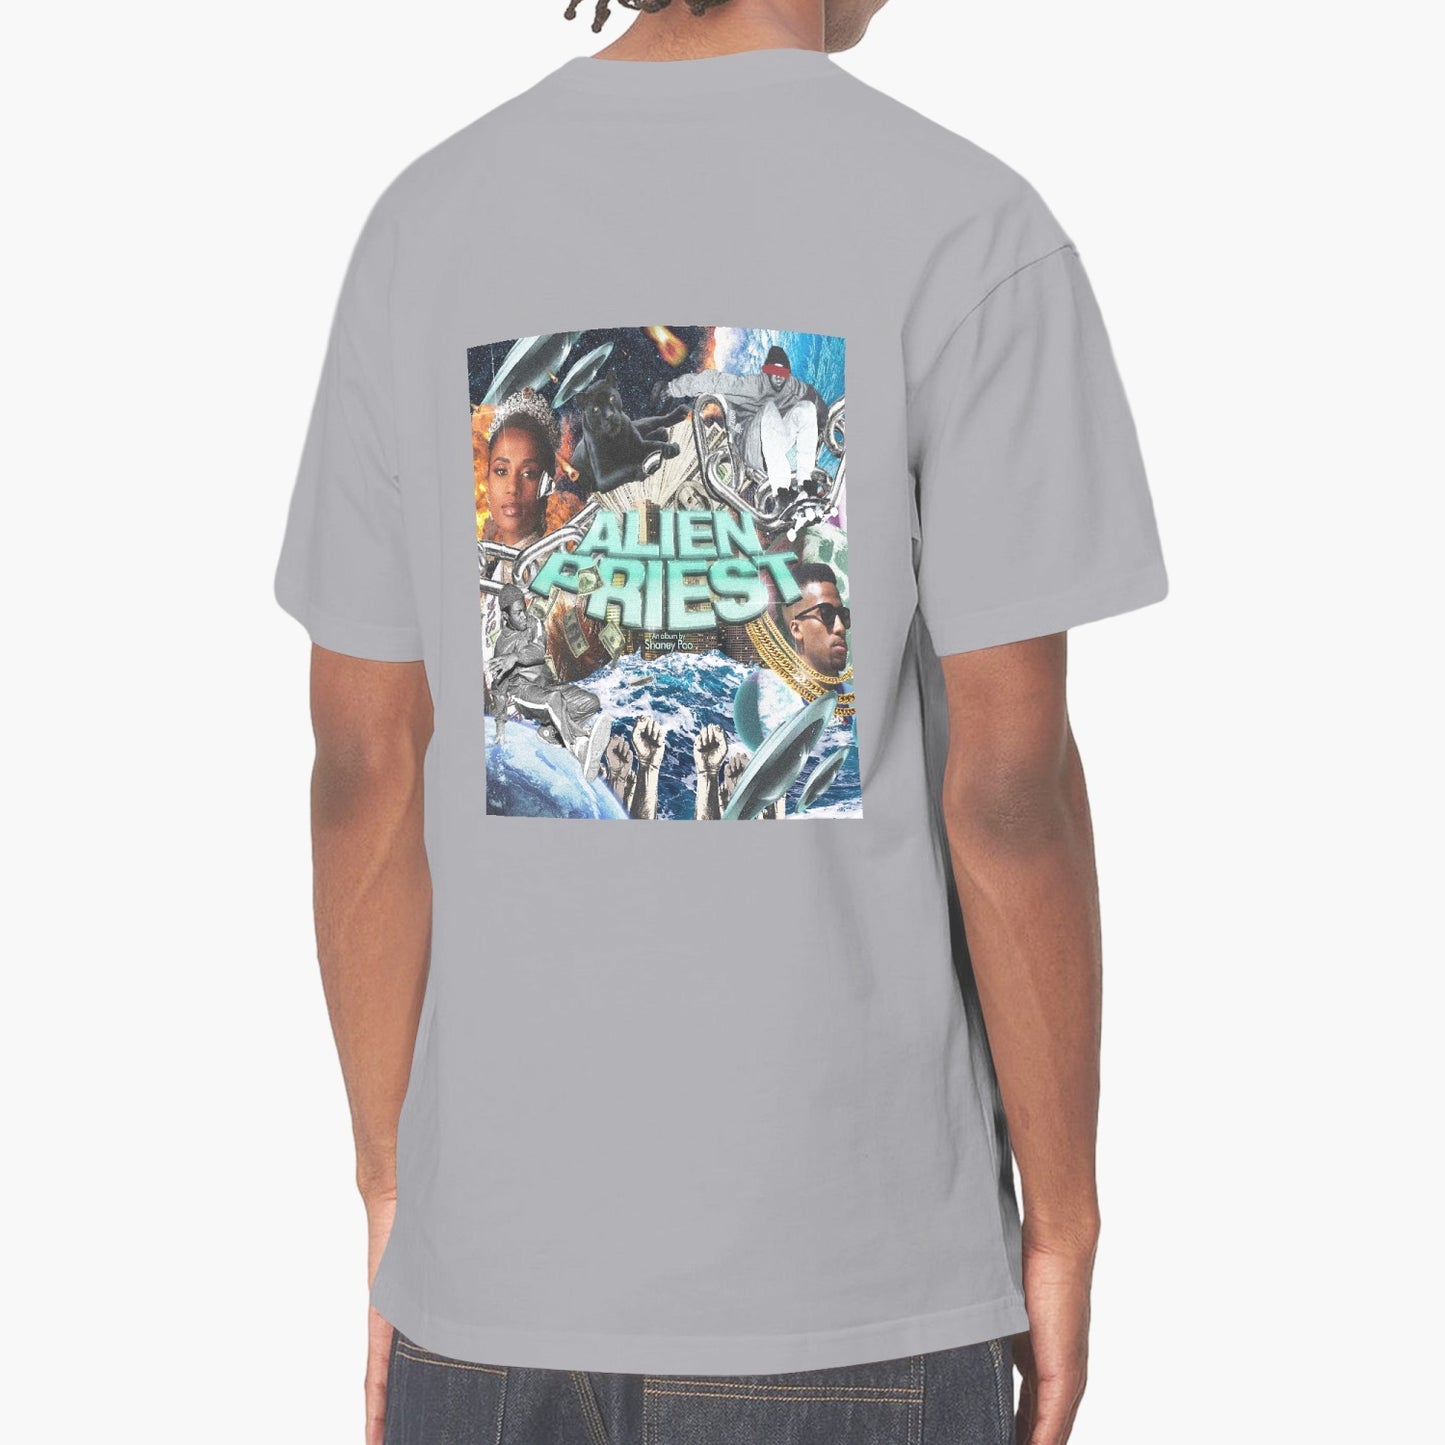 4. Alien Priest T-shirt